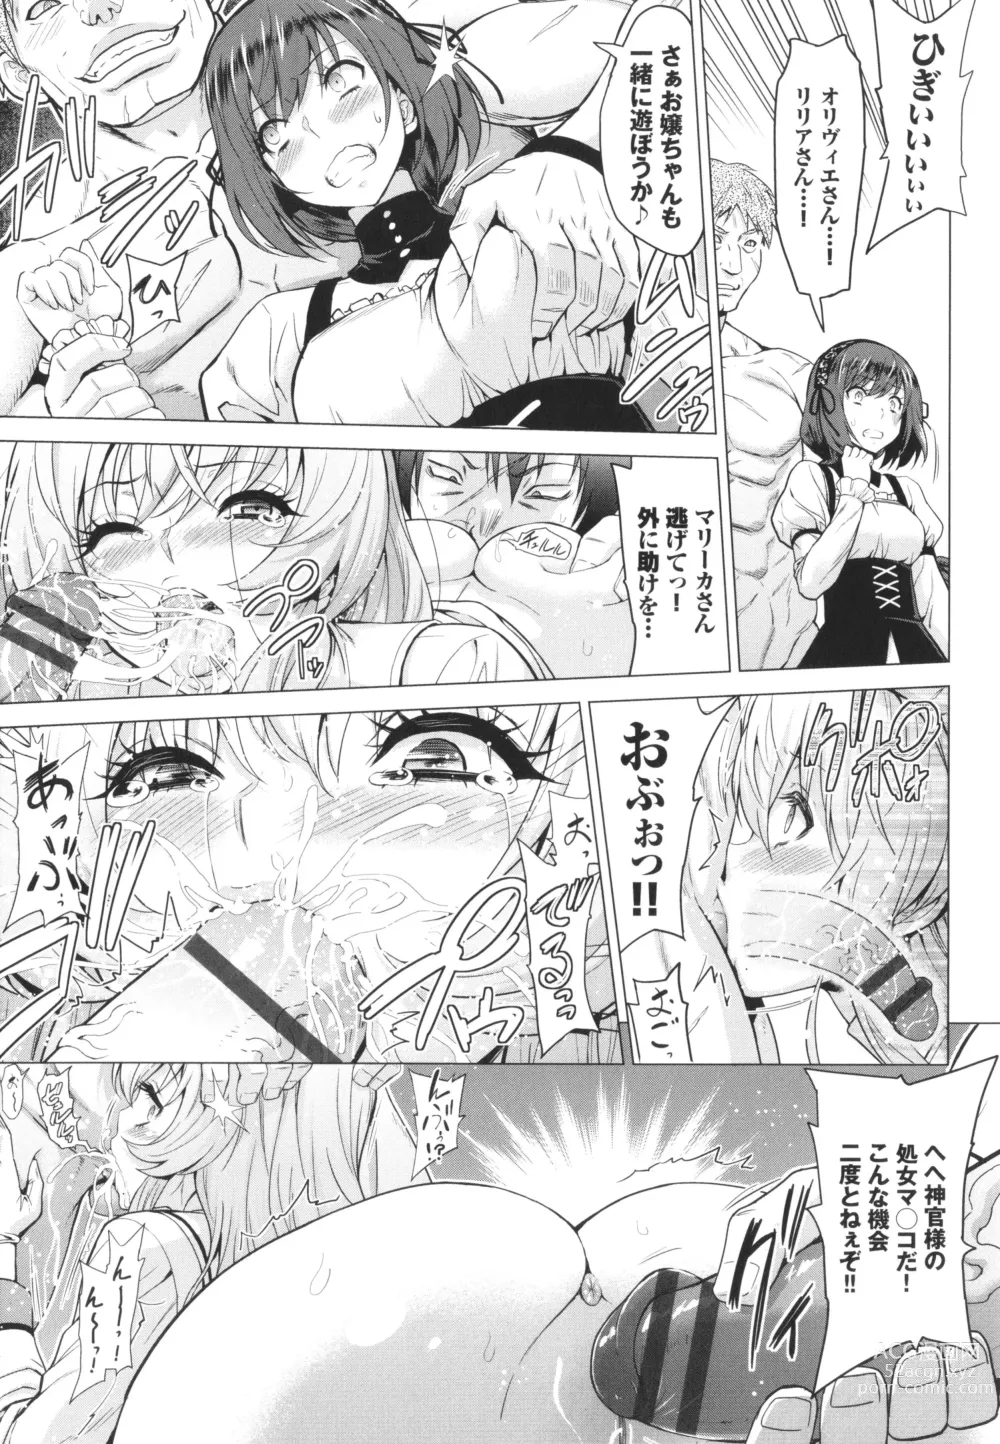 Page 22 of manga Seijo no Rakuin -Annunciation of despair-